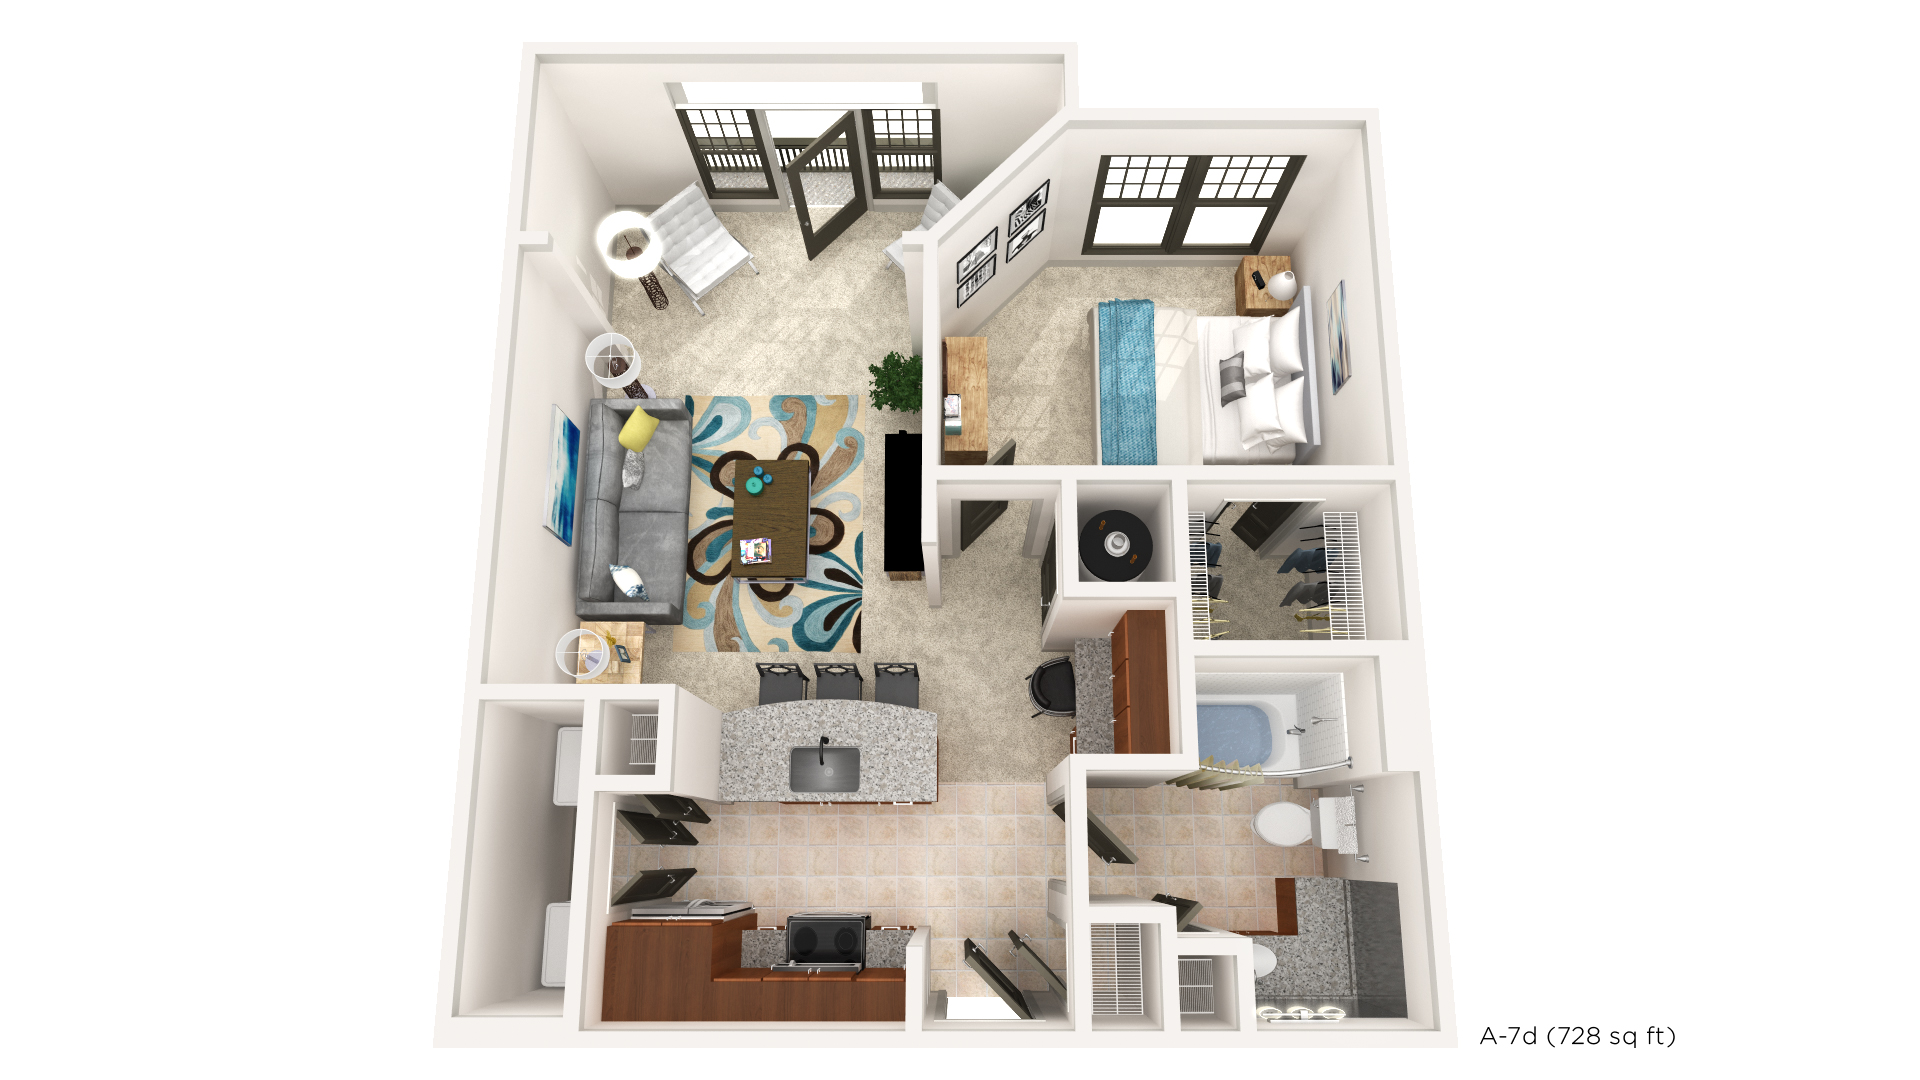 Brookleigh Flats Luxury Apartment Homes - Floorplan - A-7D